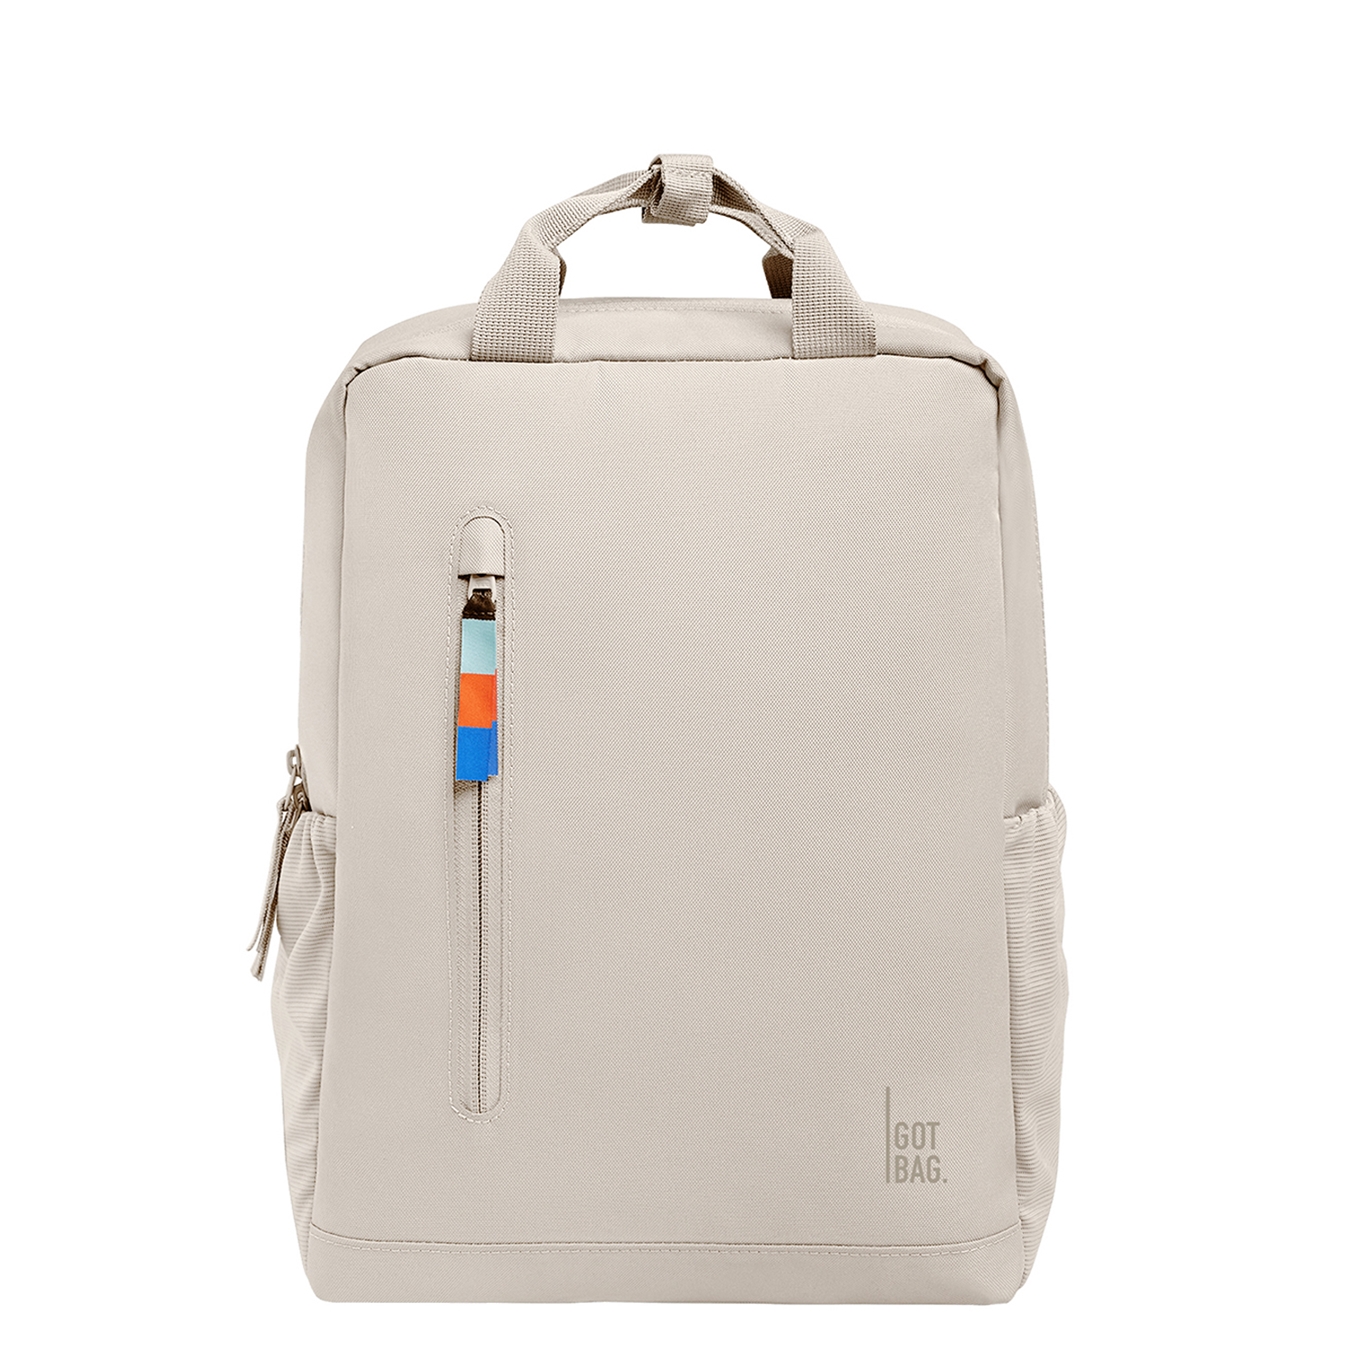 GOT BAG Daypack 2.0 soft shell backpack